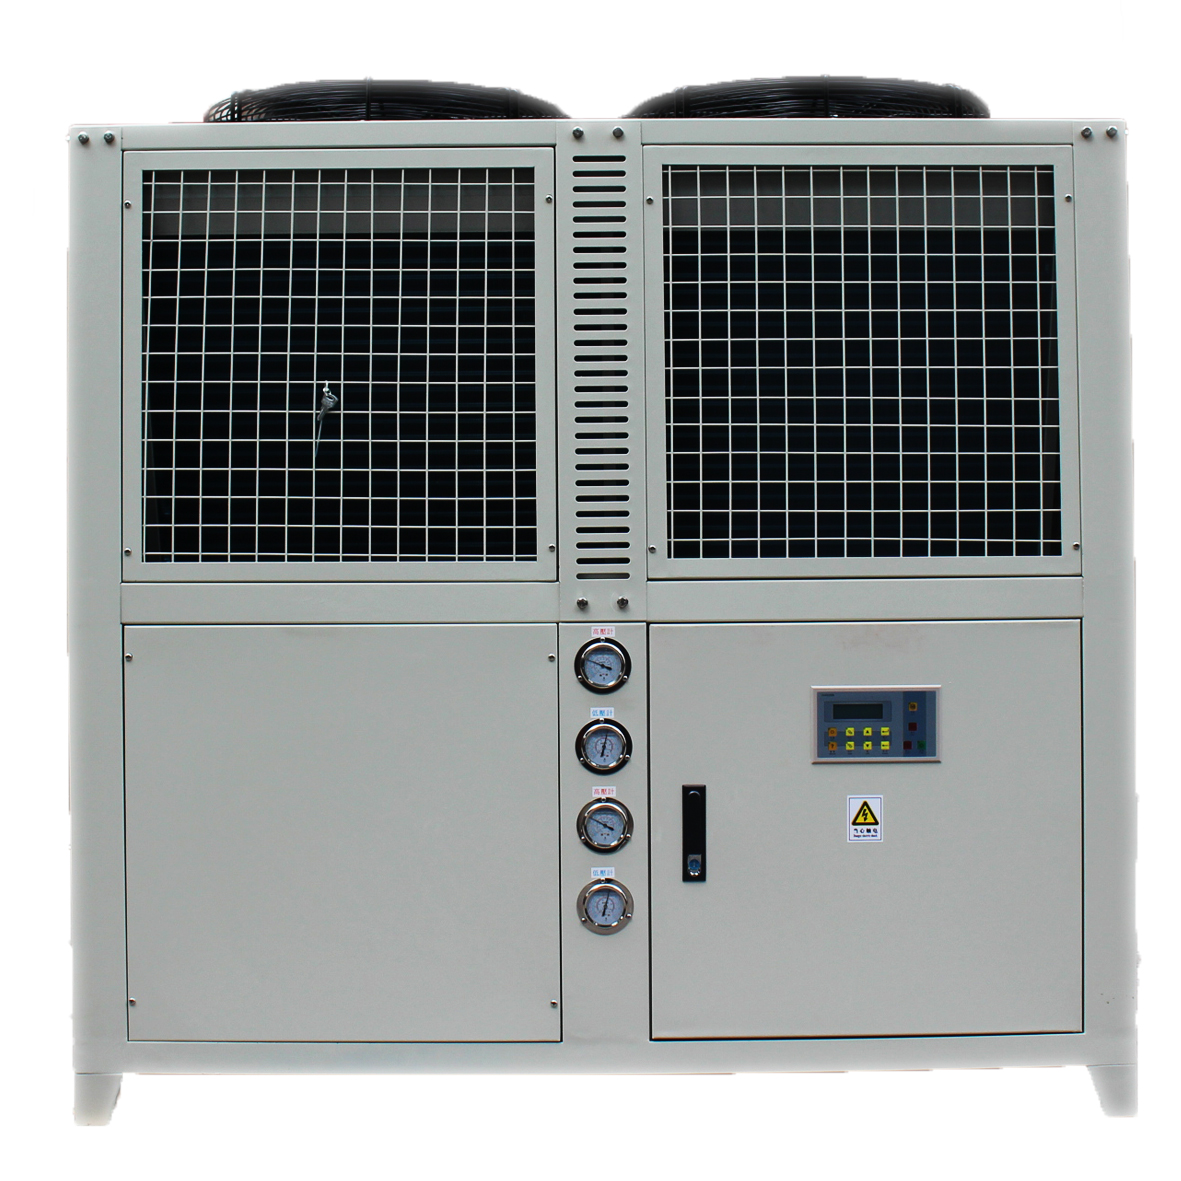 深圳冷却循环水机DW-LS-1200W